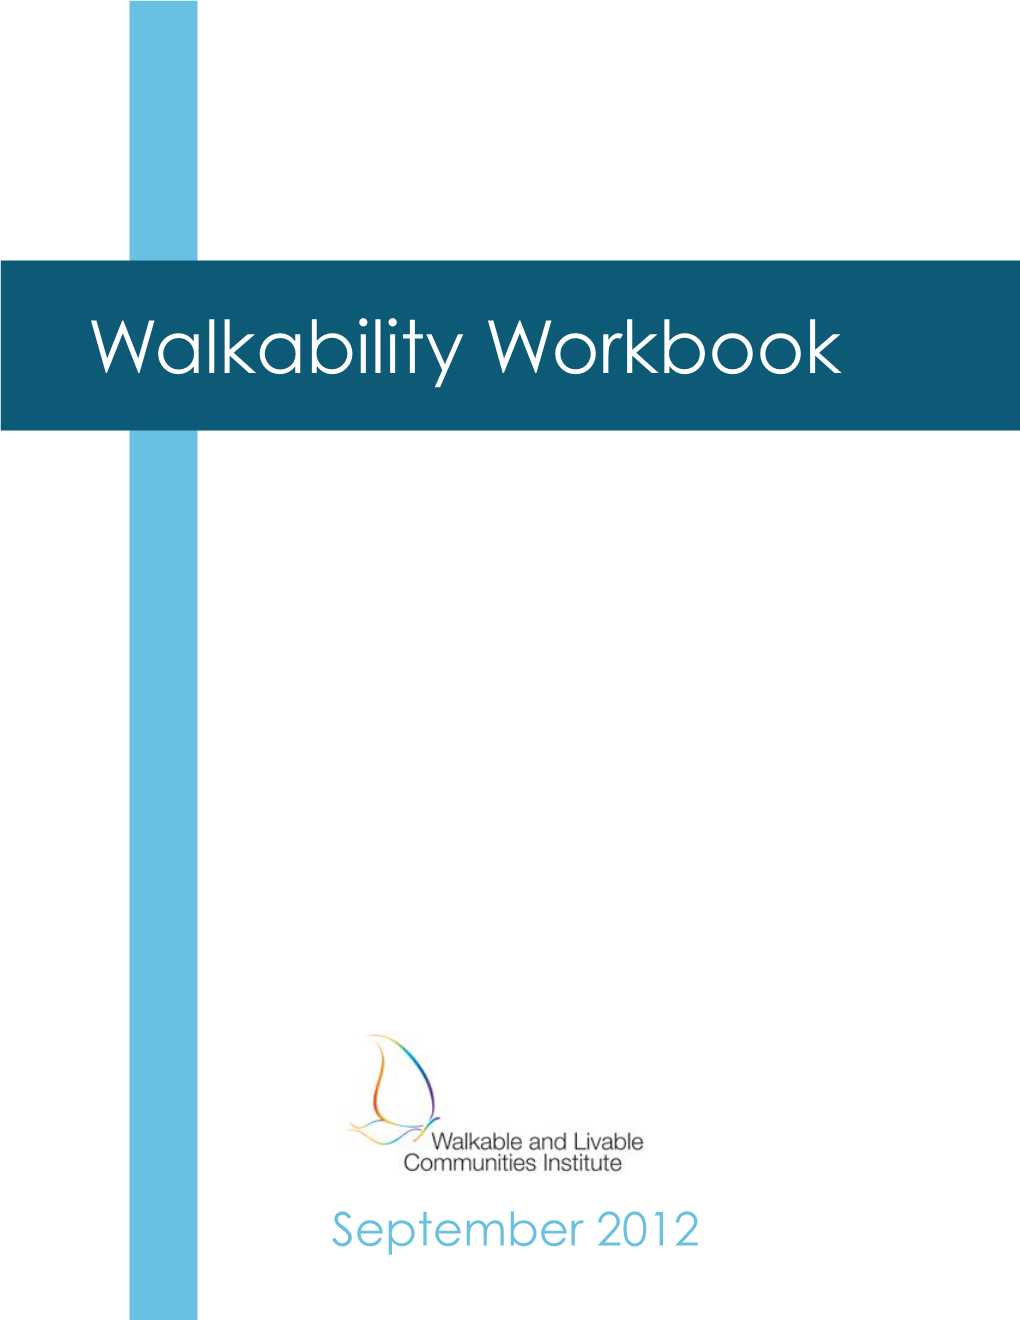 Walkability Workbook